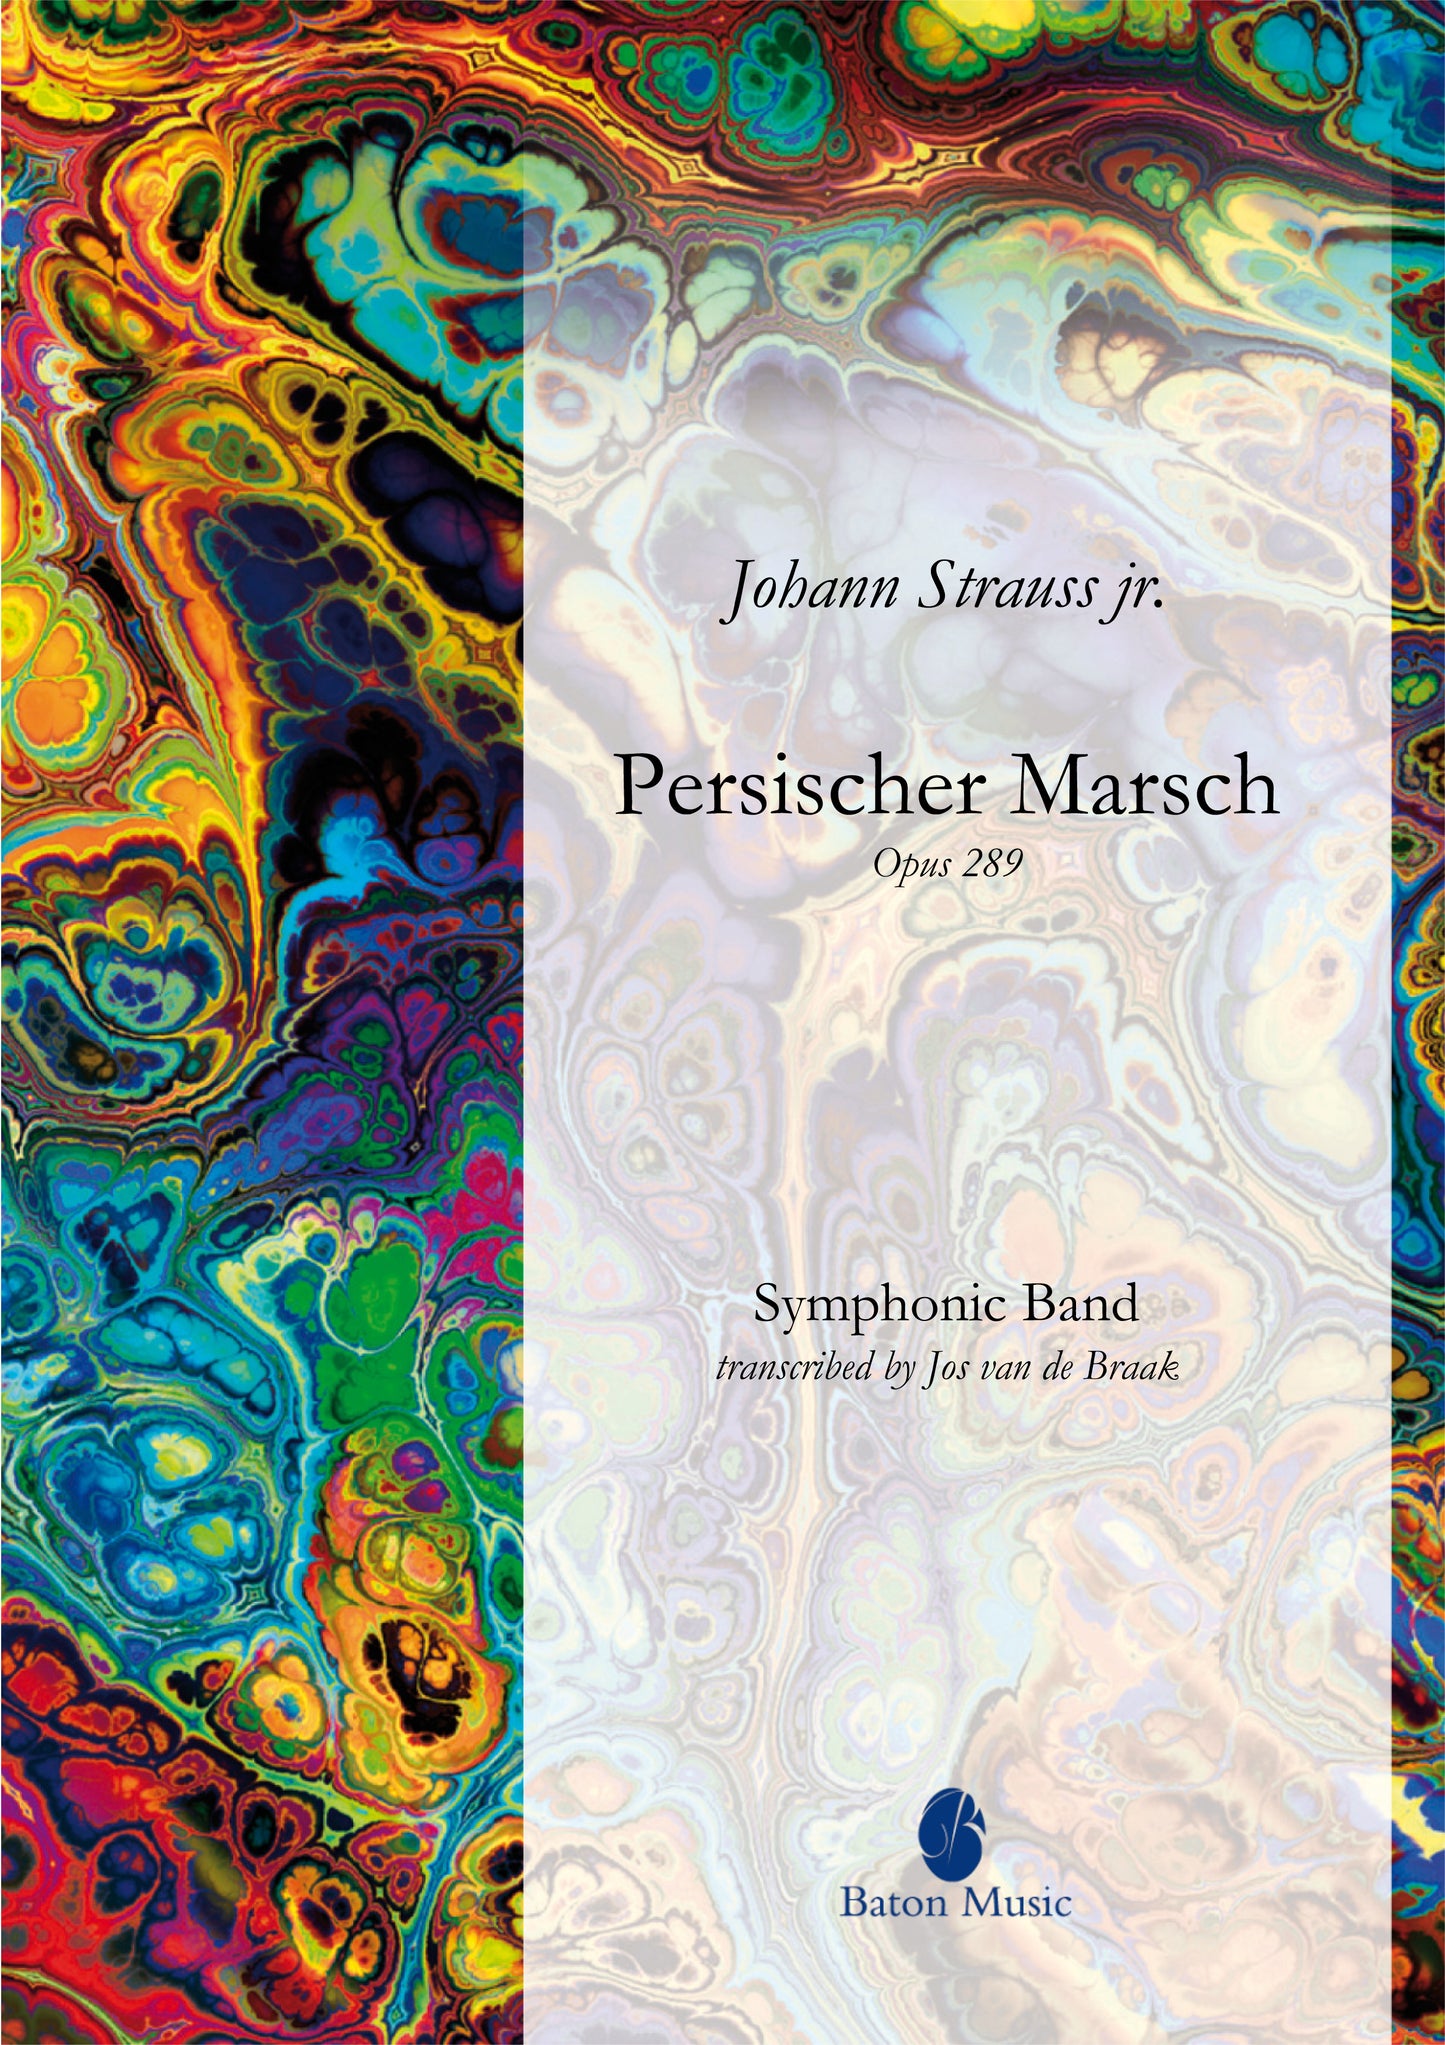 Persischer Marsch (March) - Johann Strauss